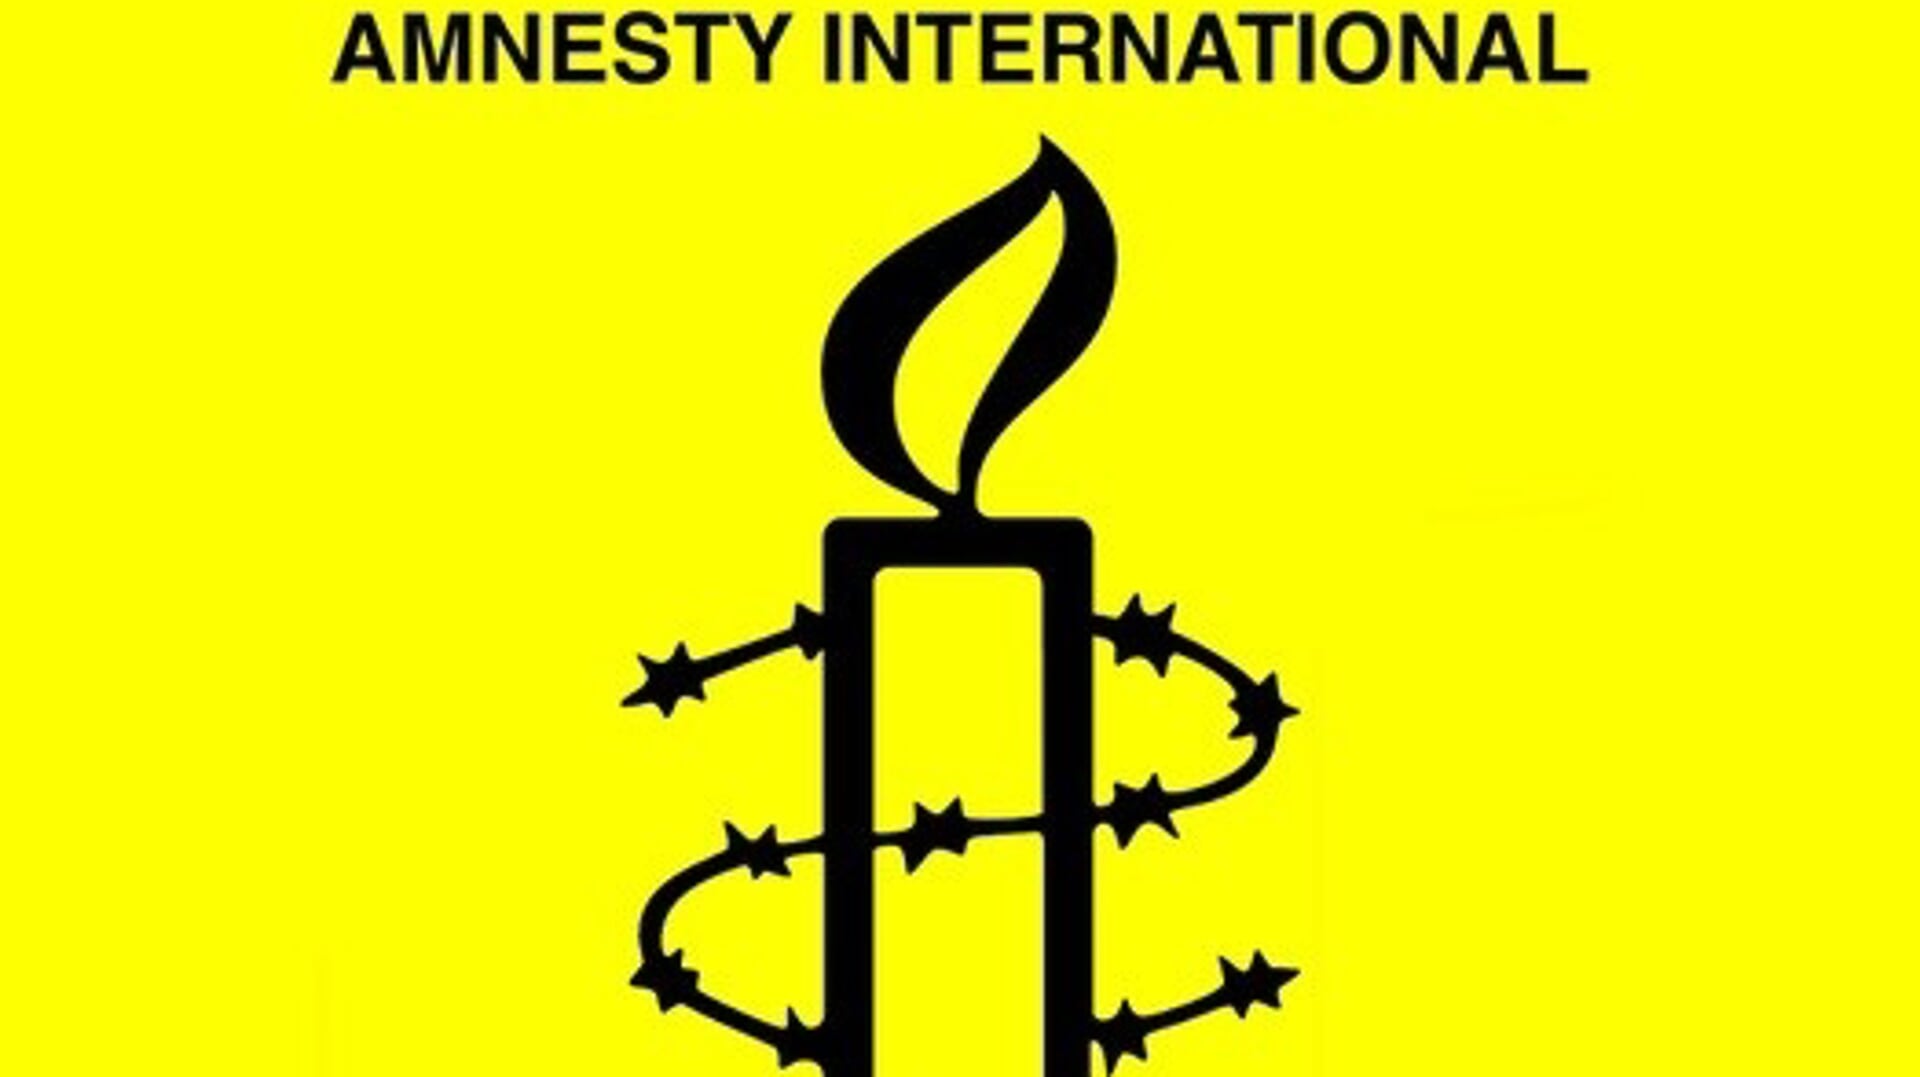 Amnesty international, afdeling Berkelland. Foto: PR